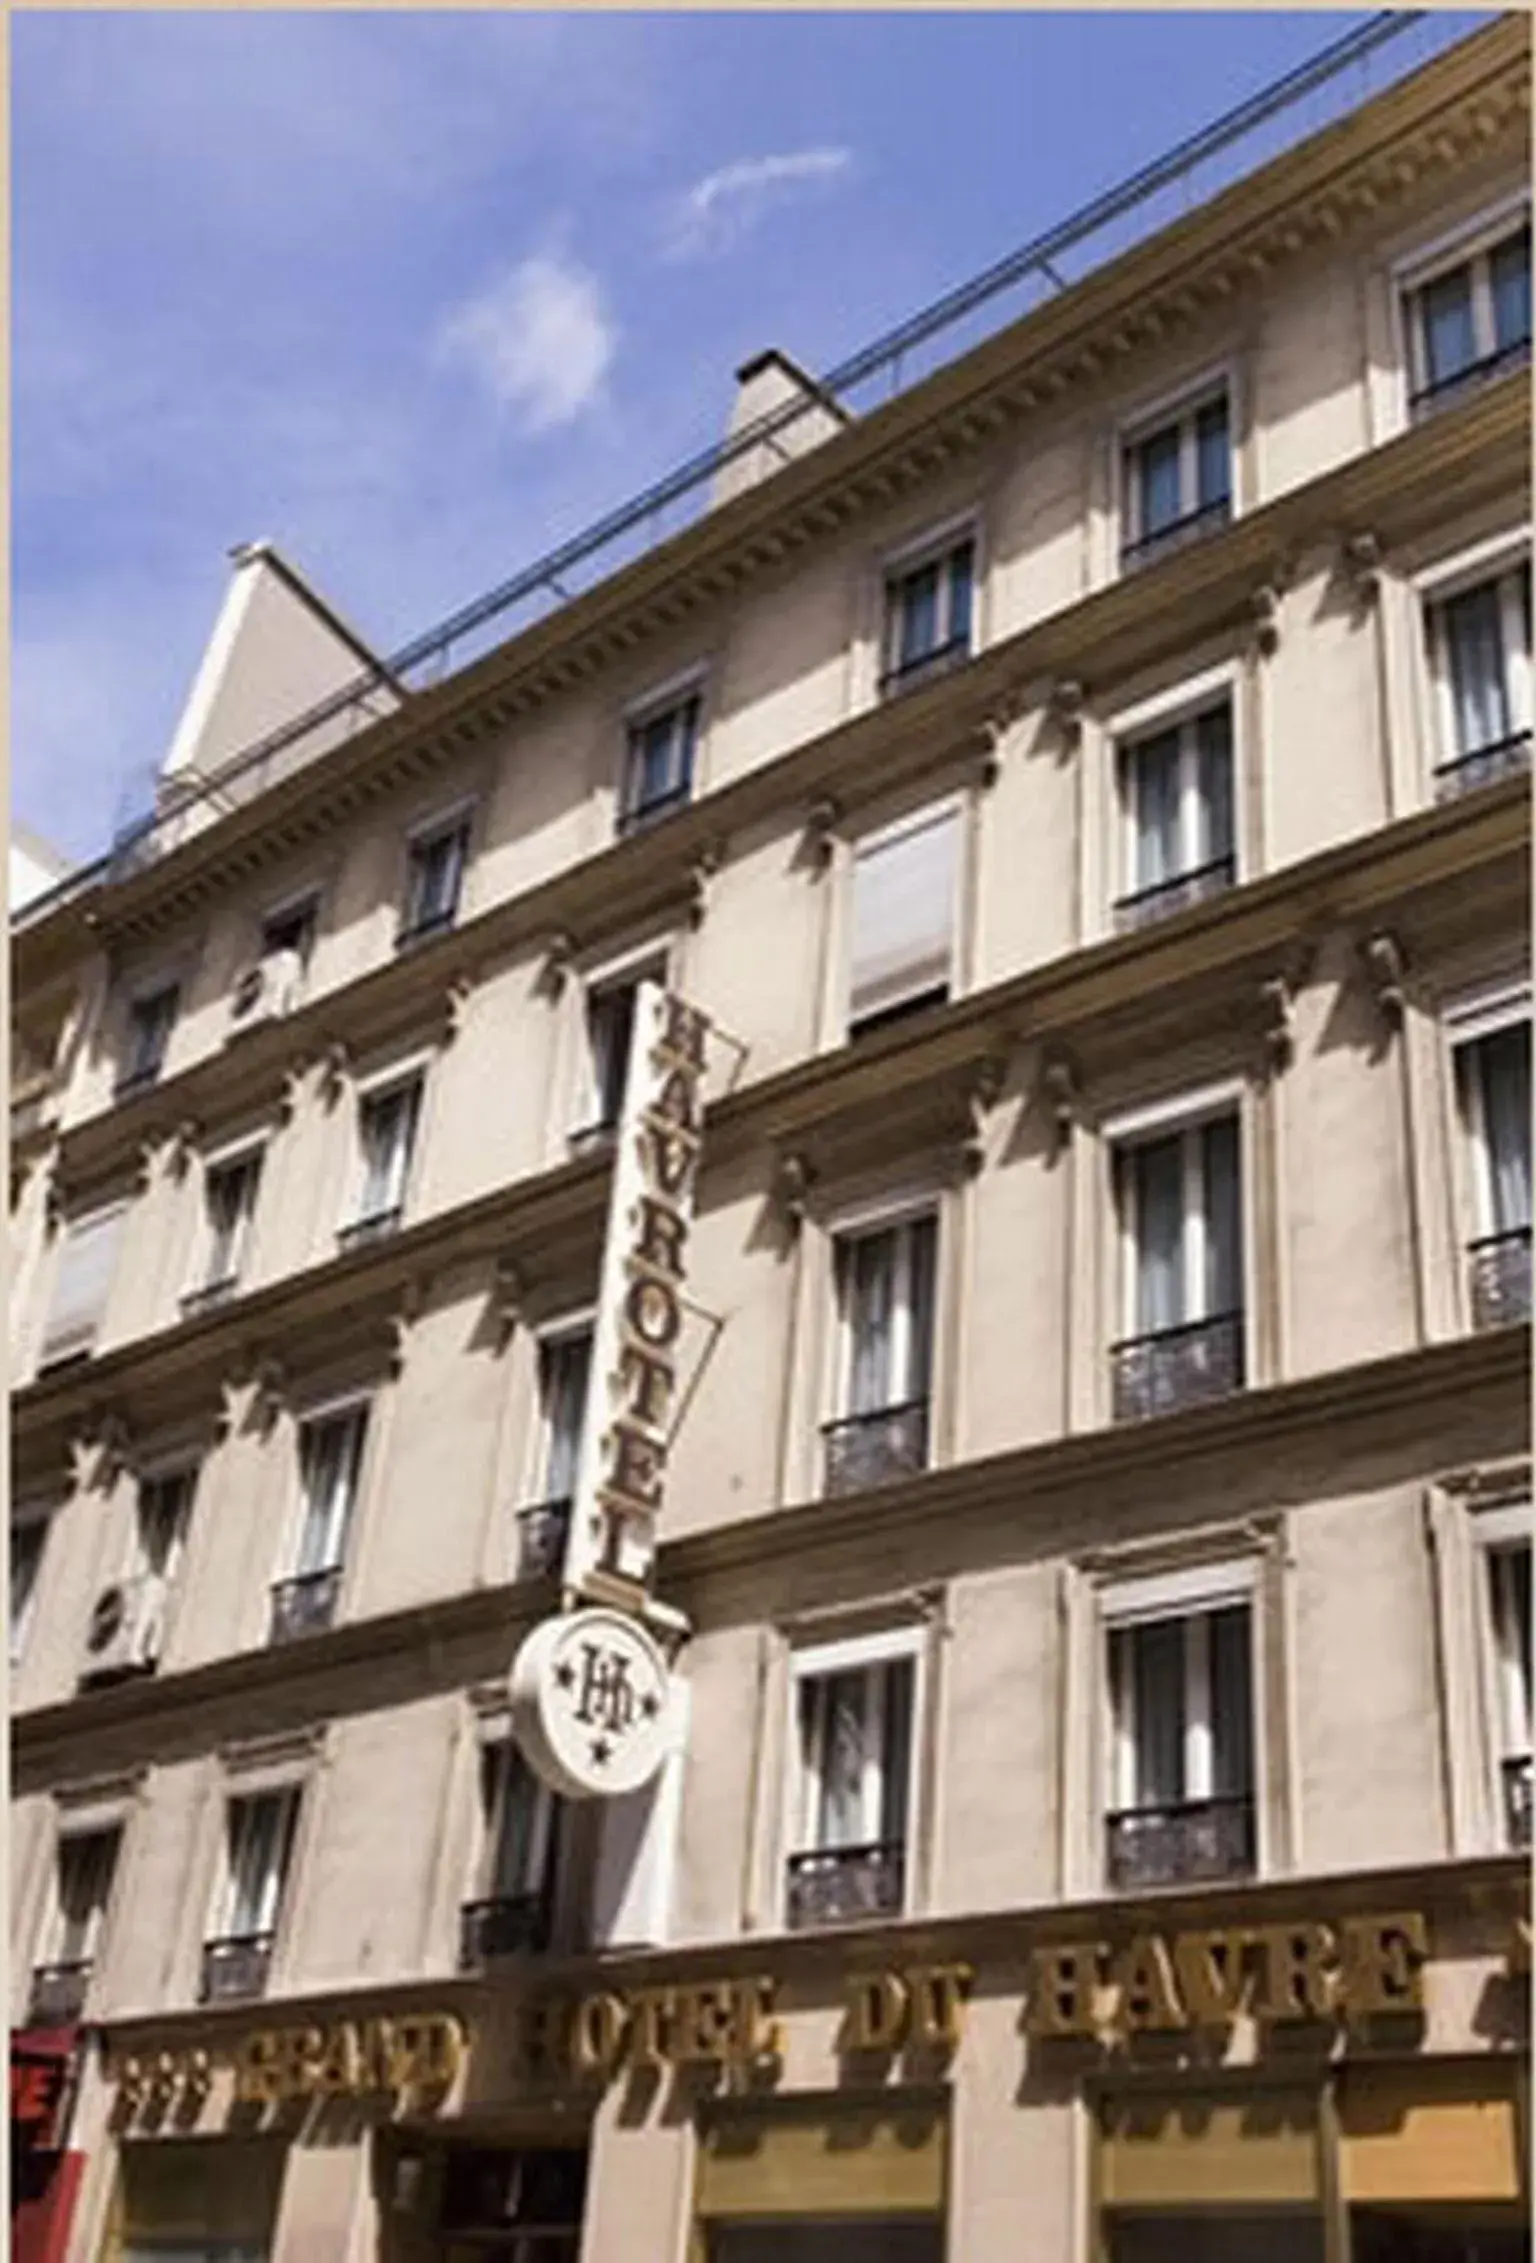 Facade/entrance, Property Building in Grand Hotel Du Havre